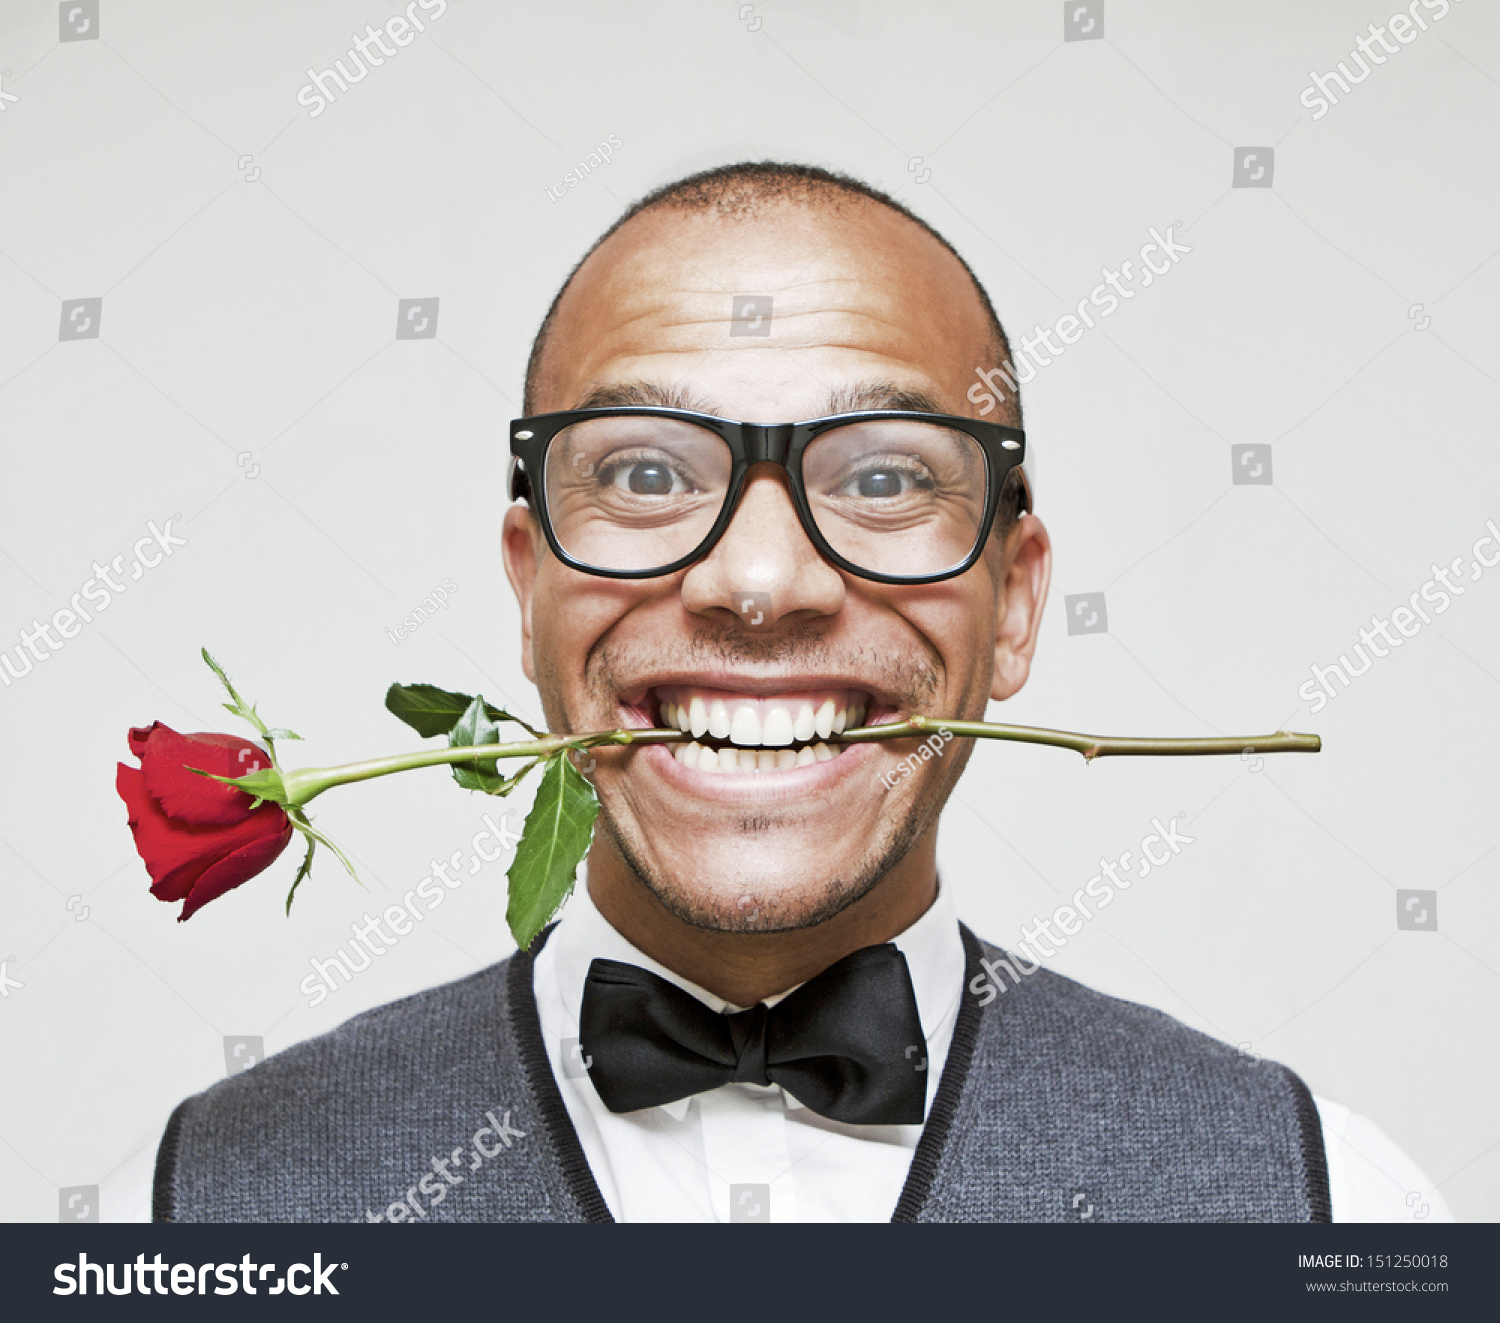 Romantic Geek in Love, holding a rose between his teeth excitedly #151250018